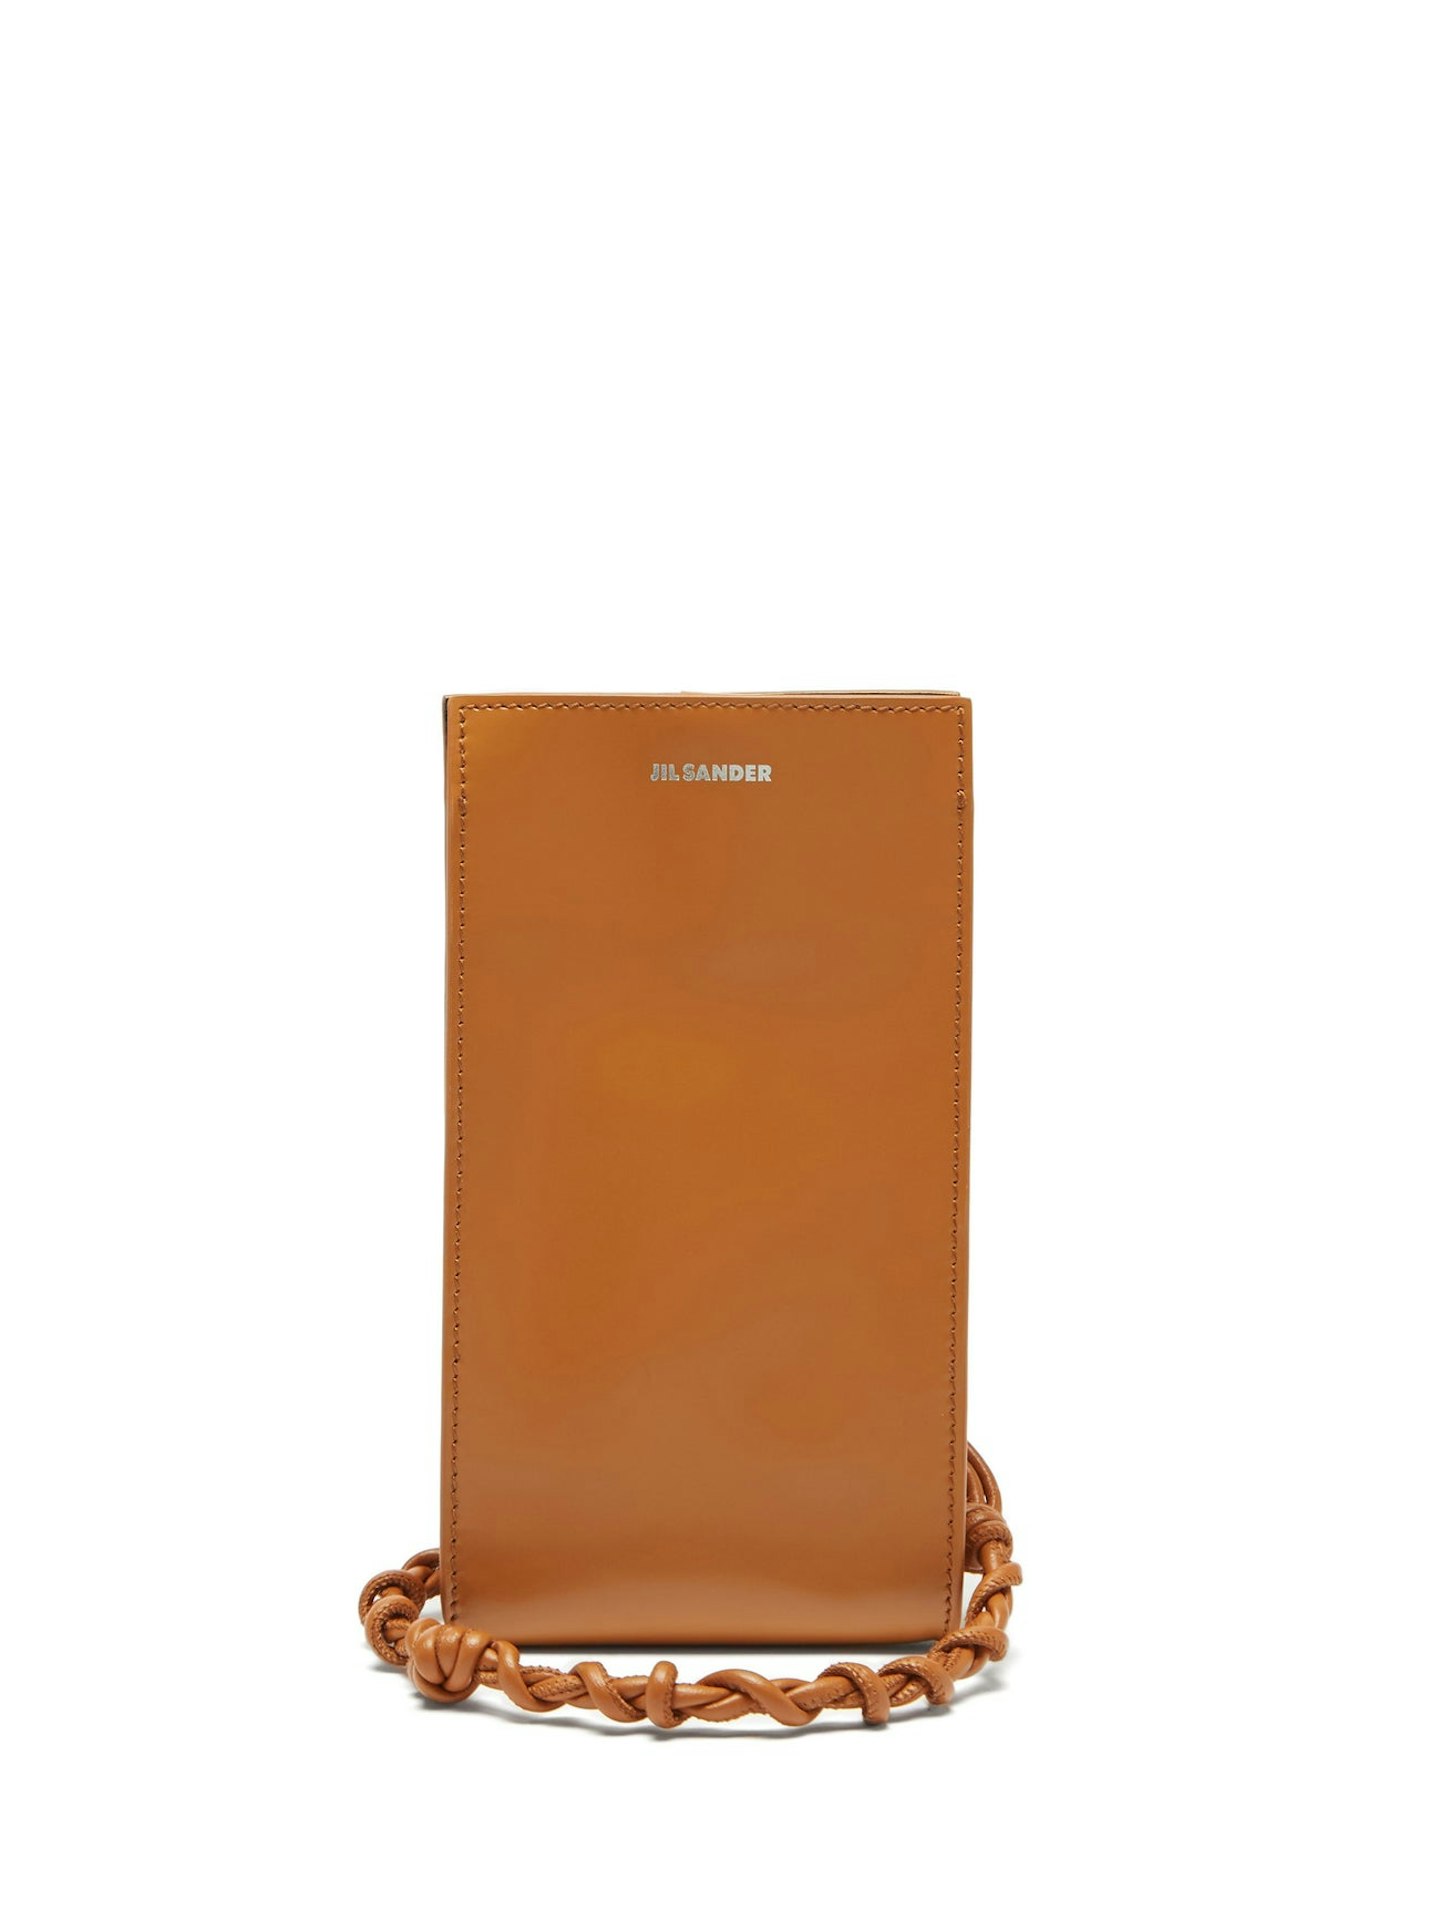 Jil Sander, Tangle leather phone case, £360